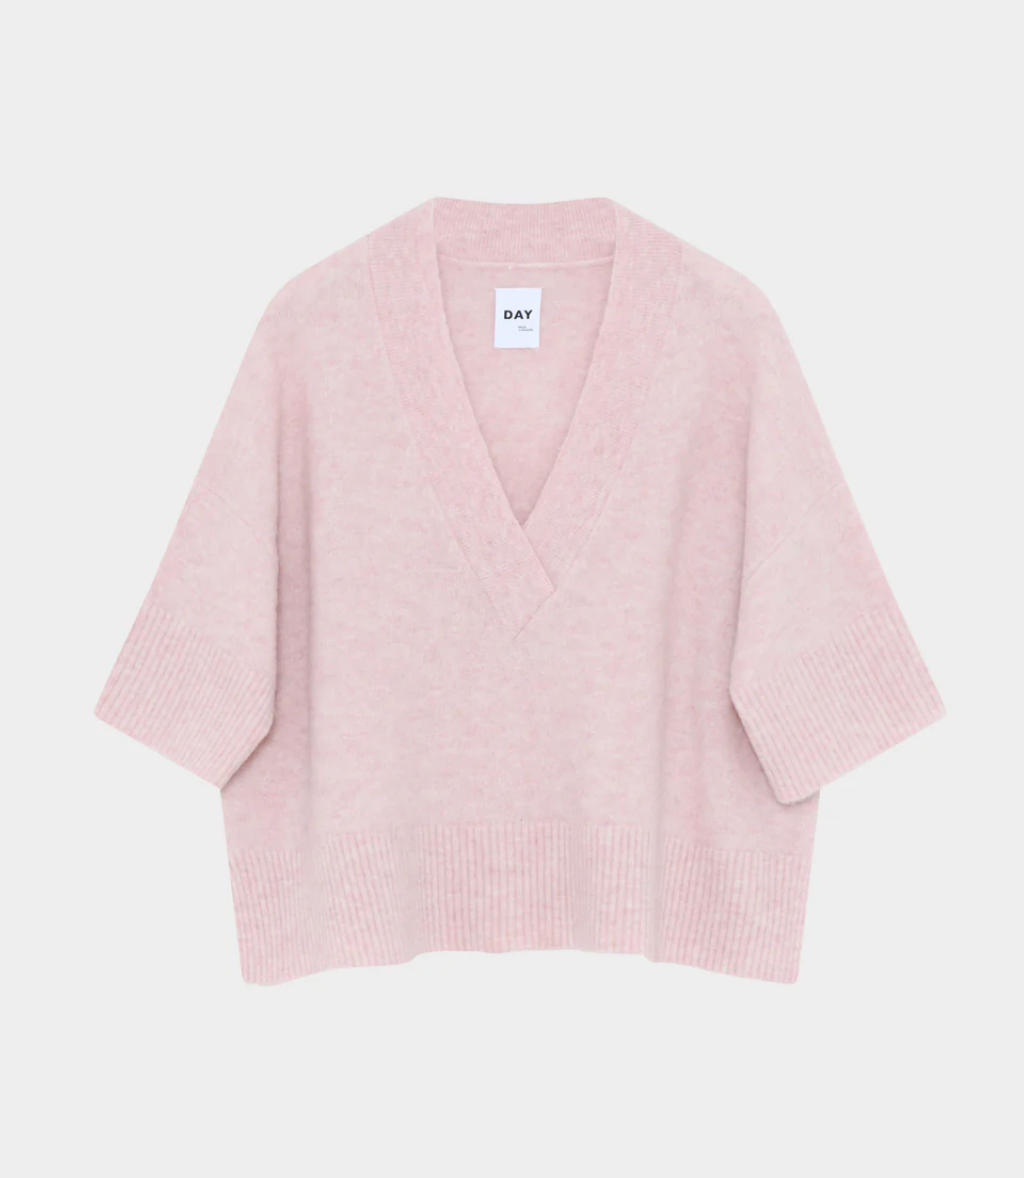 Pale pink V neck alpaca  blend knit with short sleeves